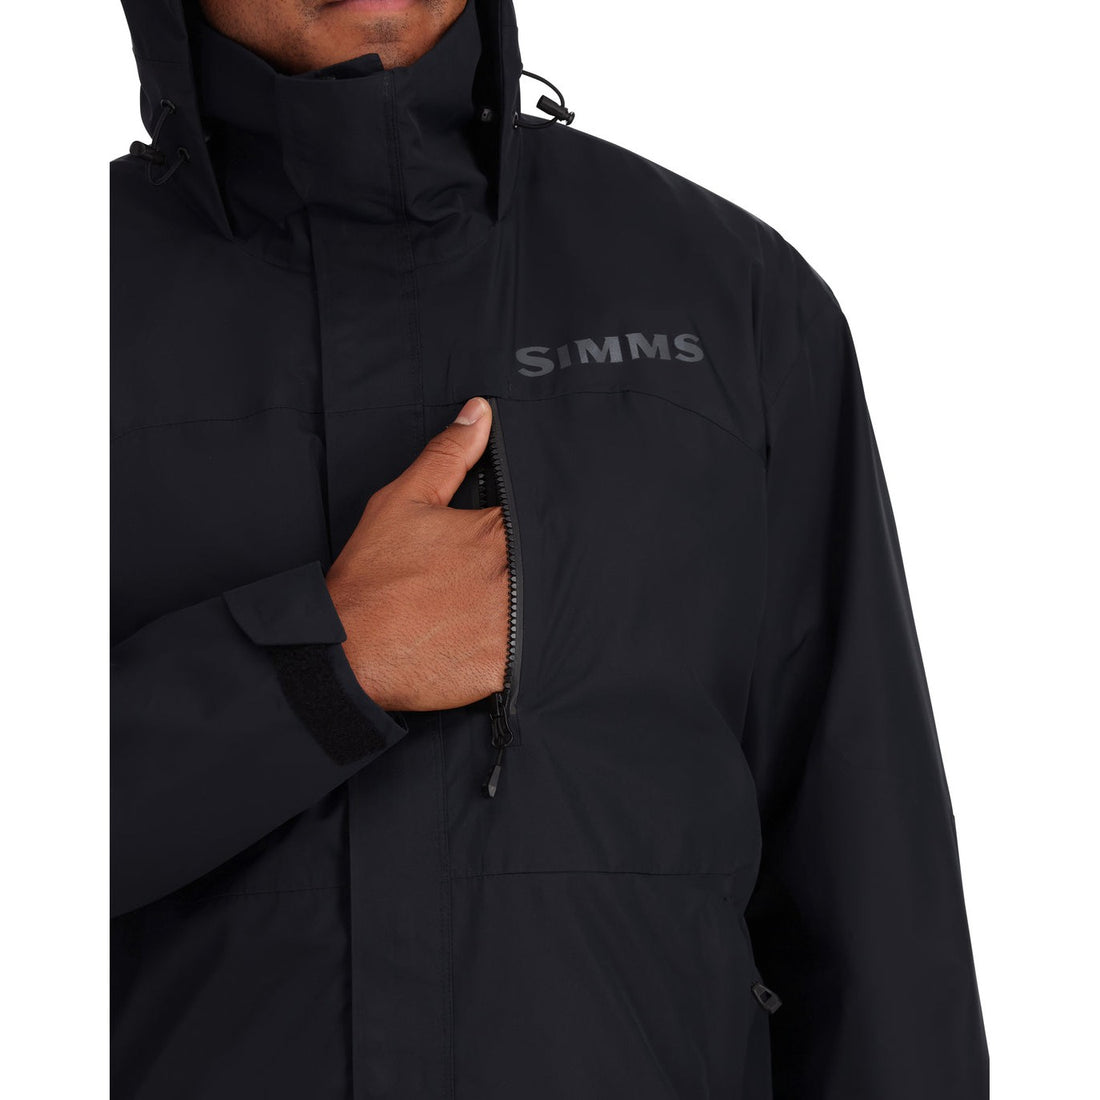 Simms Challenger Jacket Men's Black / XL